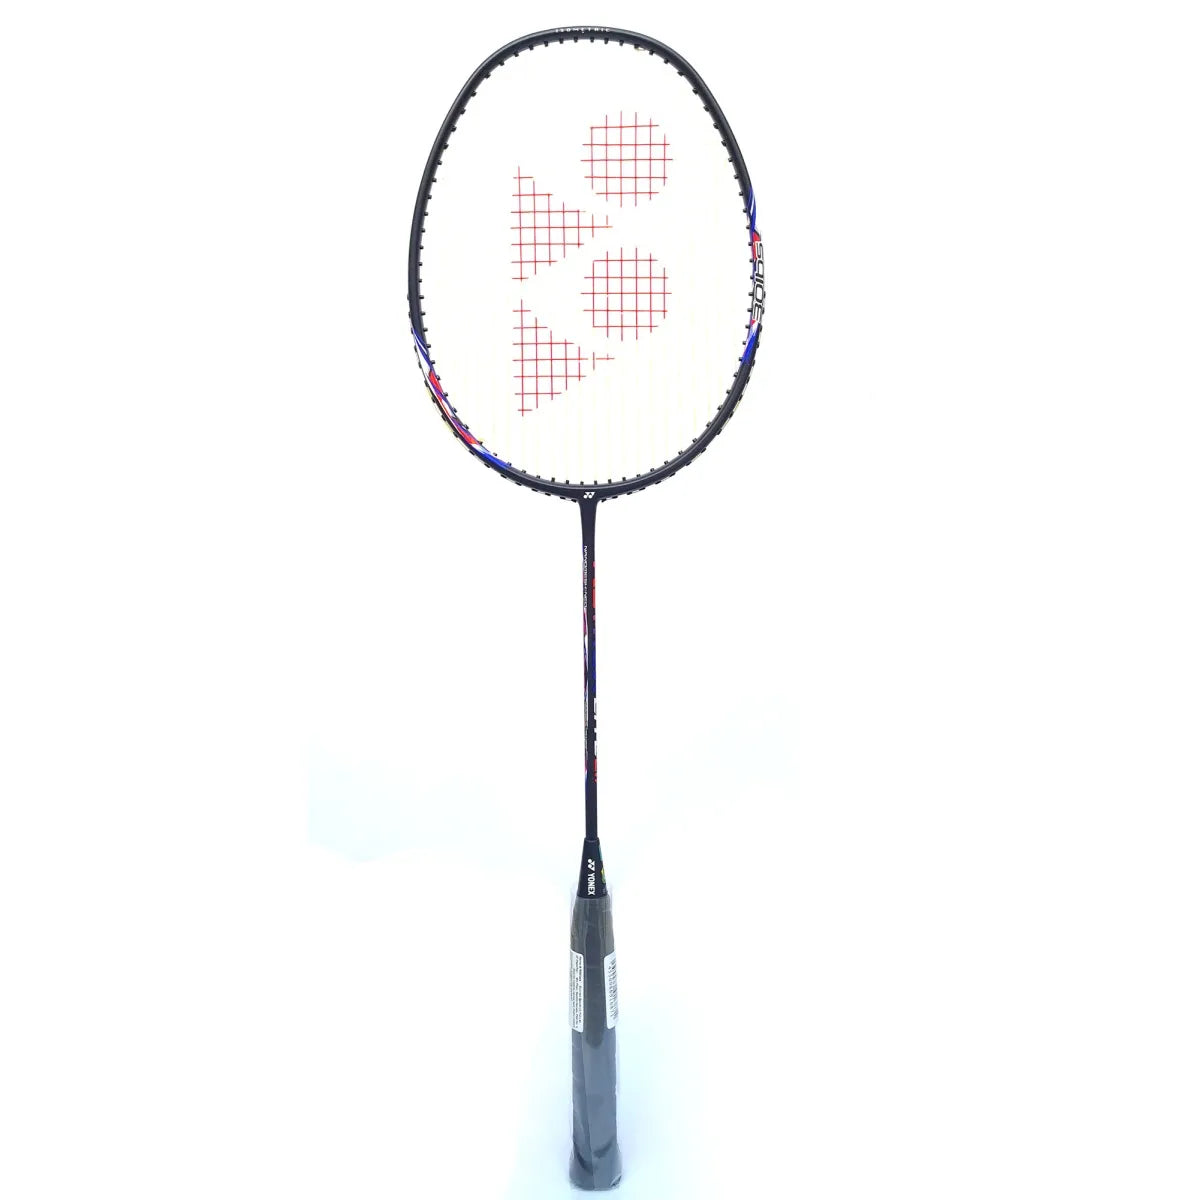 Yonex Astrox Lite 21i Badminton Racket